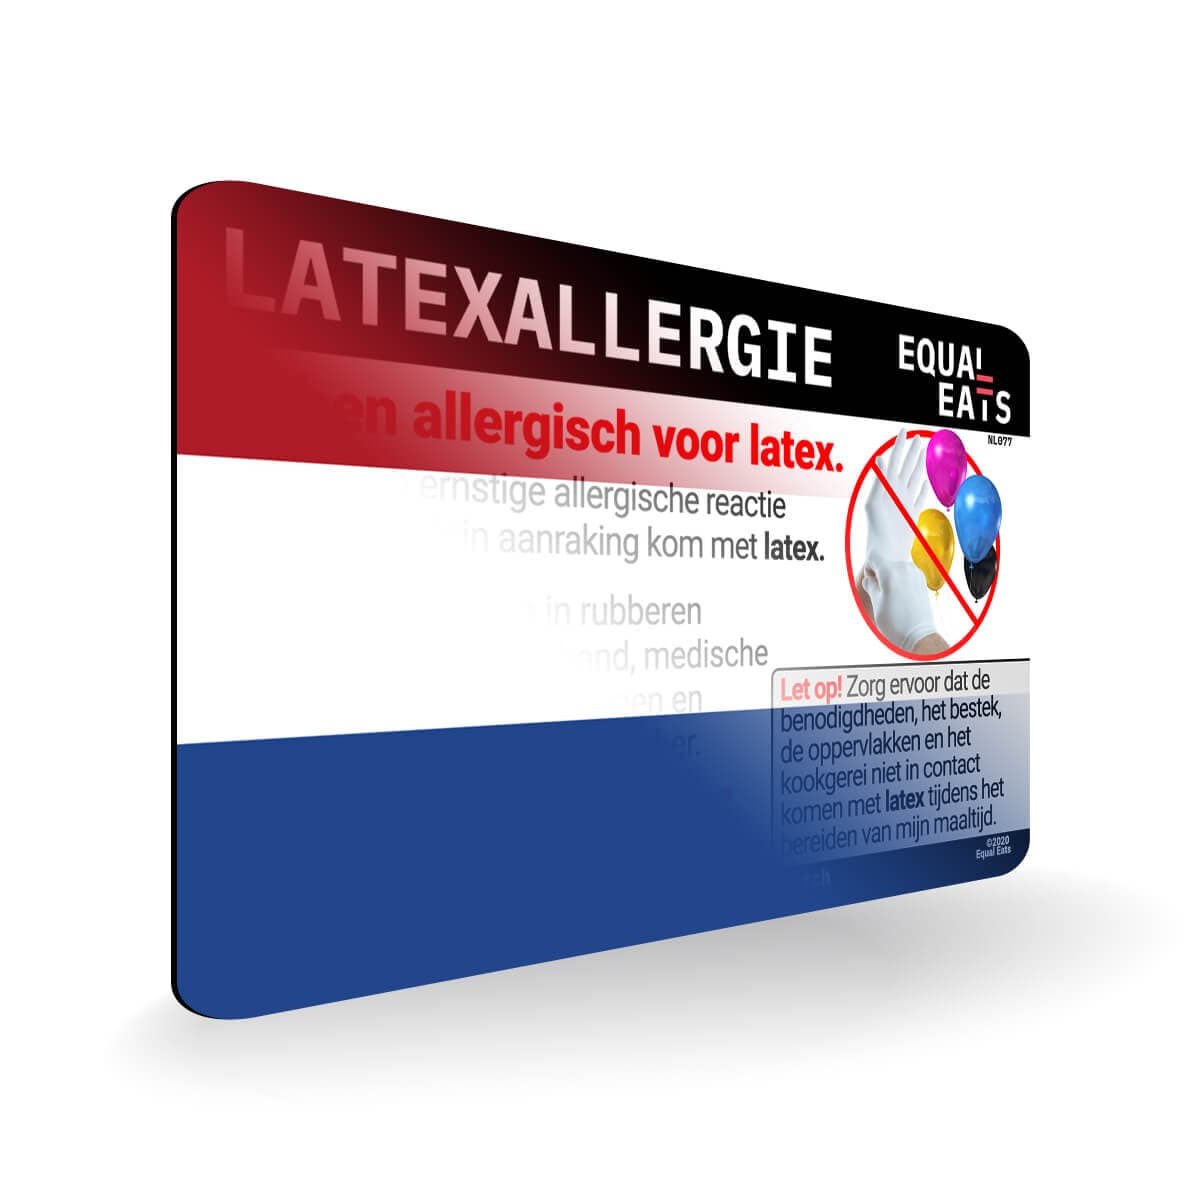 Latex Allergy in Dutch. Latex Allergy Travel Card for Netherlands